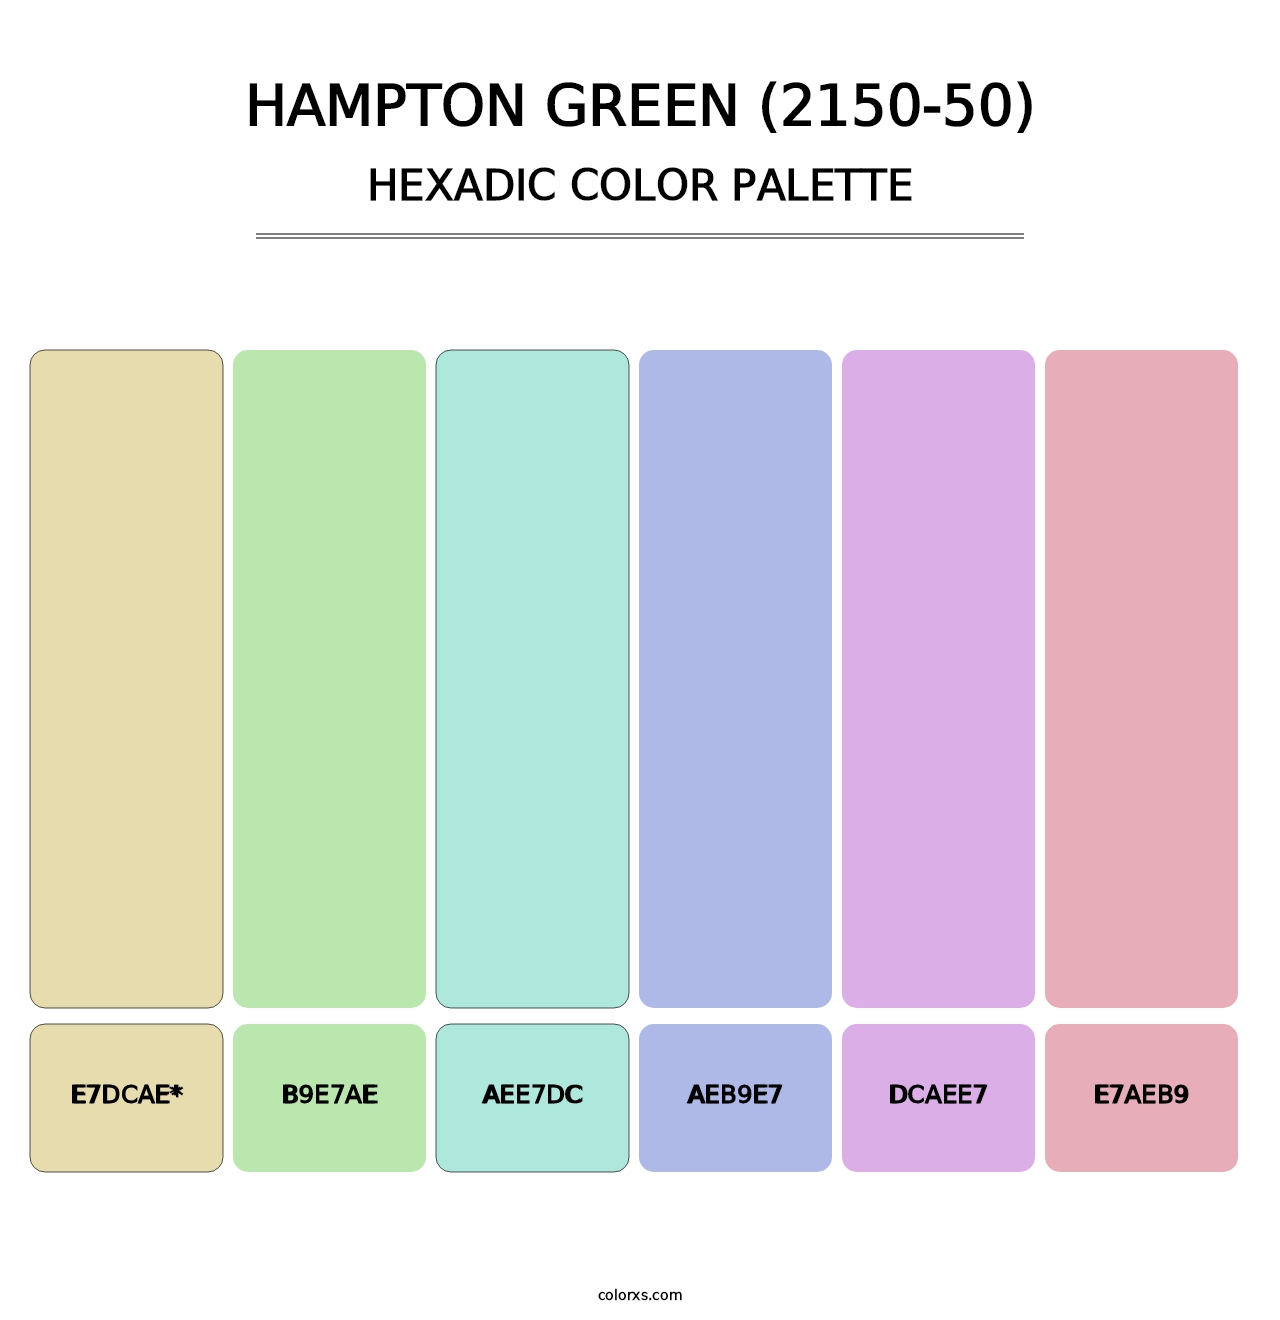 Hampton Green (2150-50) - Hexadic Color Palette